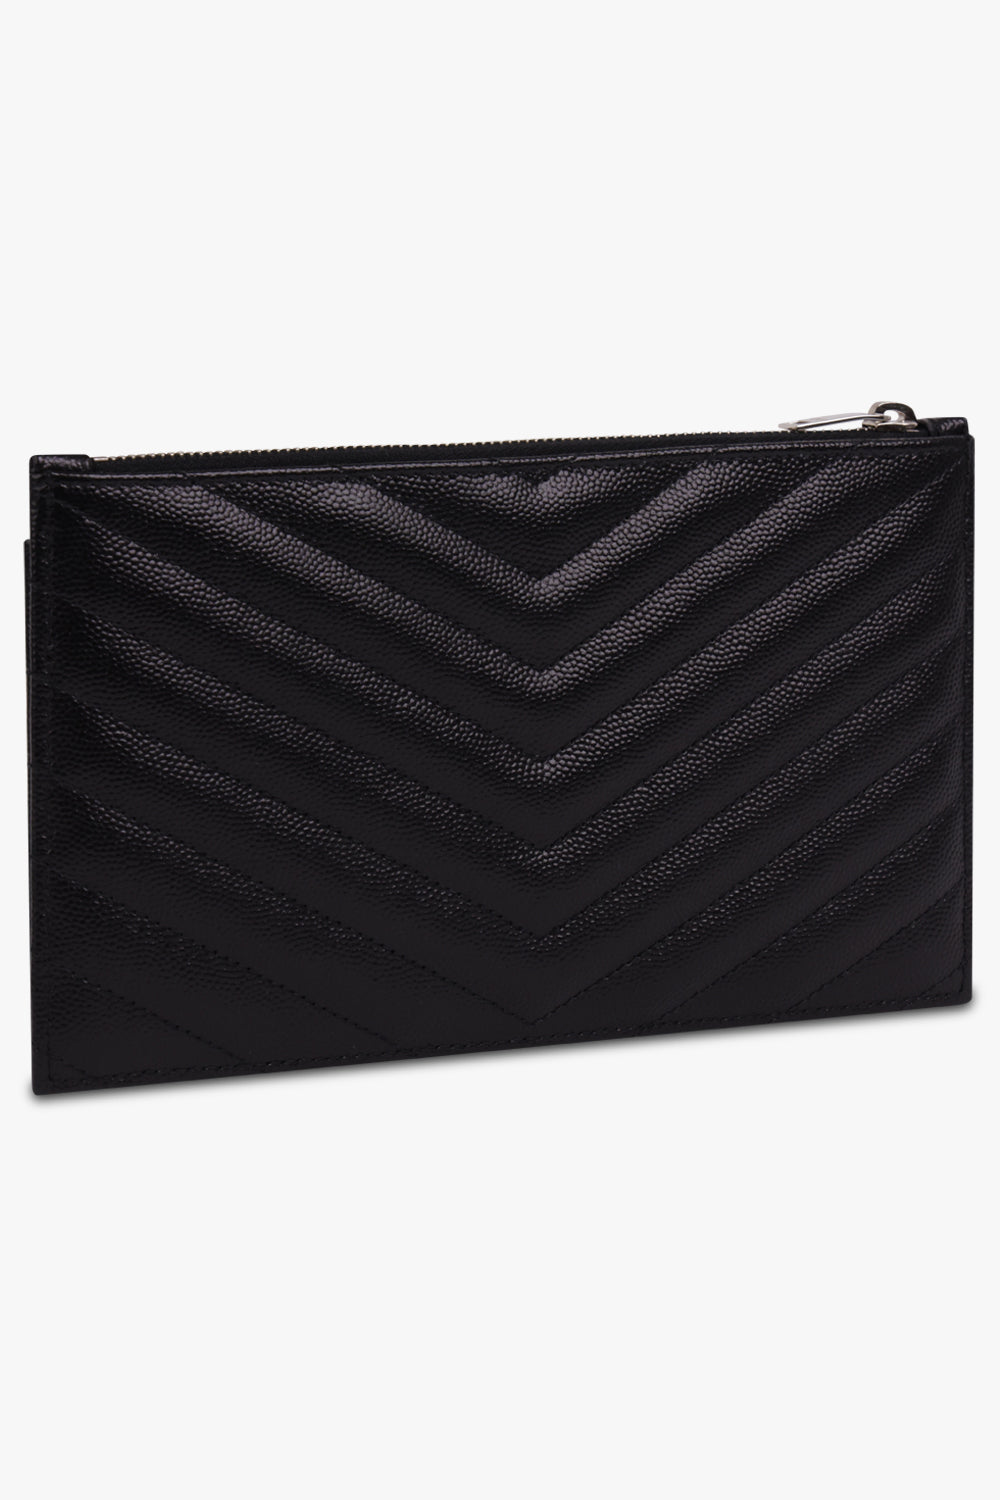 YSL Yves Saint Laurent Leather Handbags | Mercari